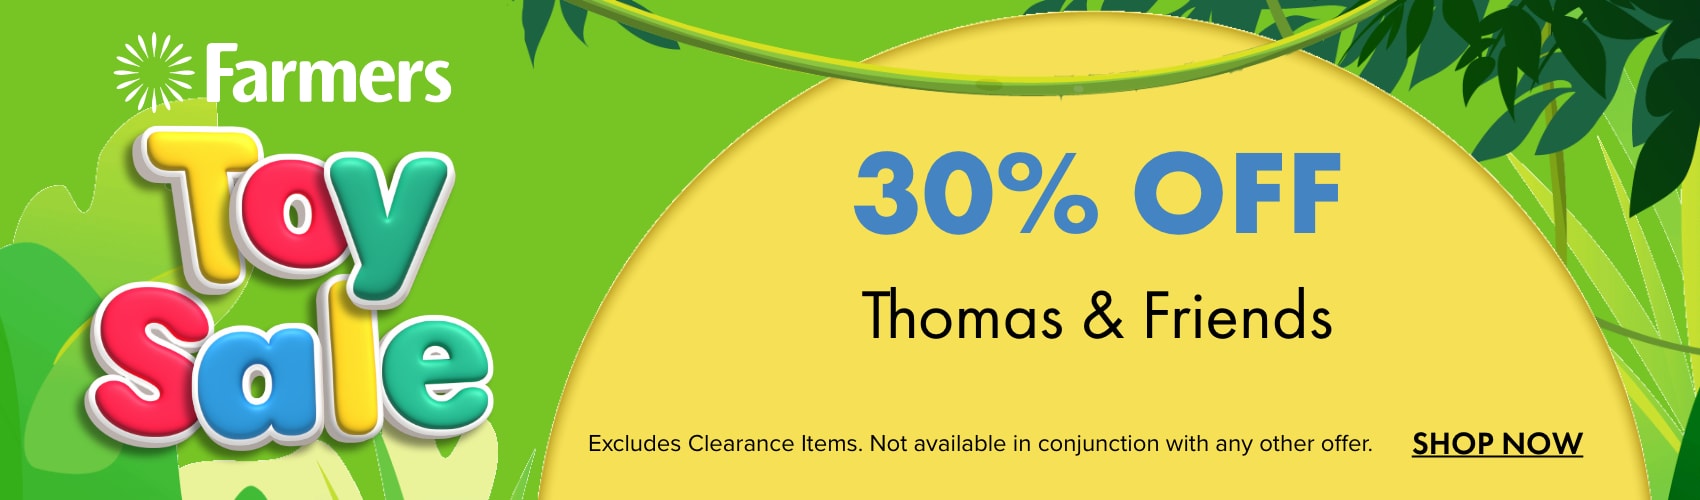 30% OFF Thomas & Friends